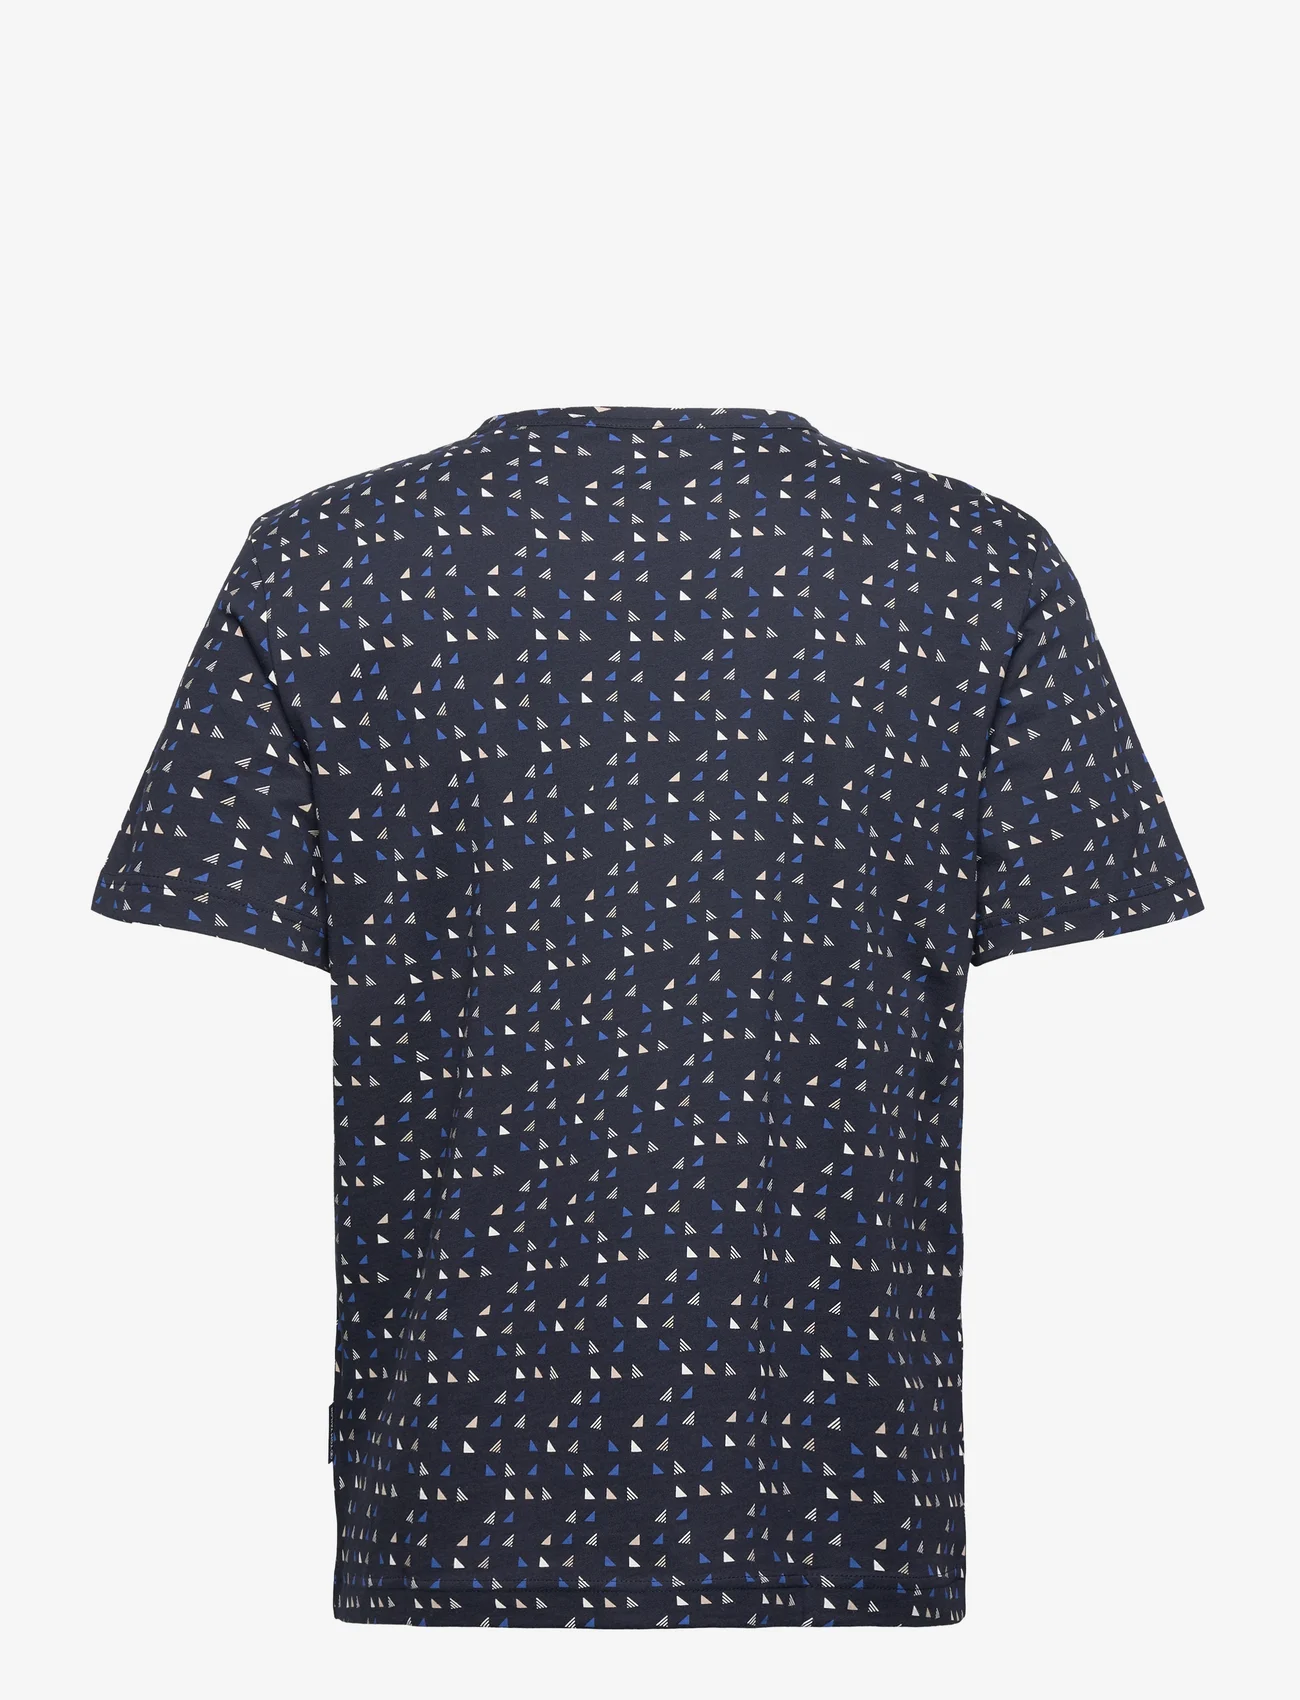 Tom Tailor - printed t-shirt - laveste priser - navy sporty triangle design - 1